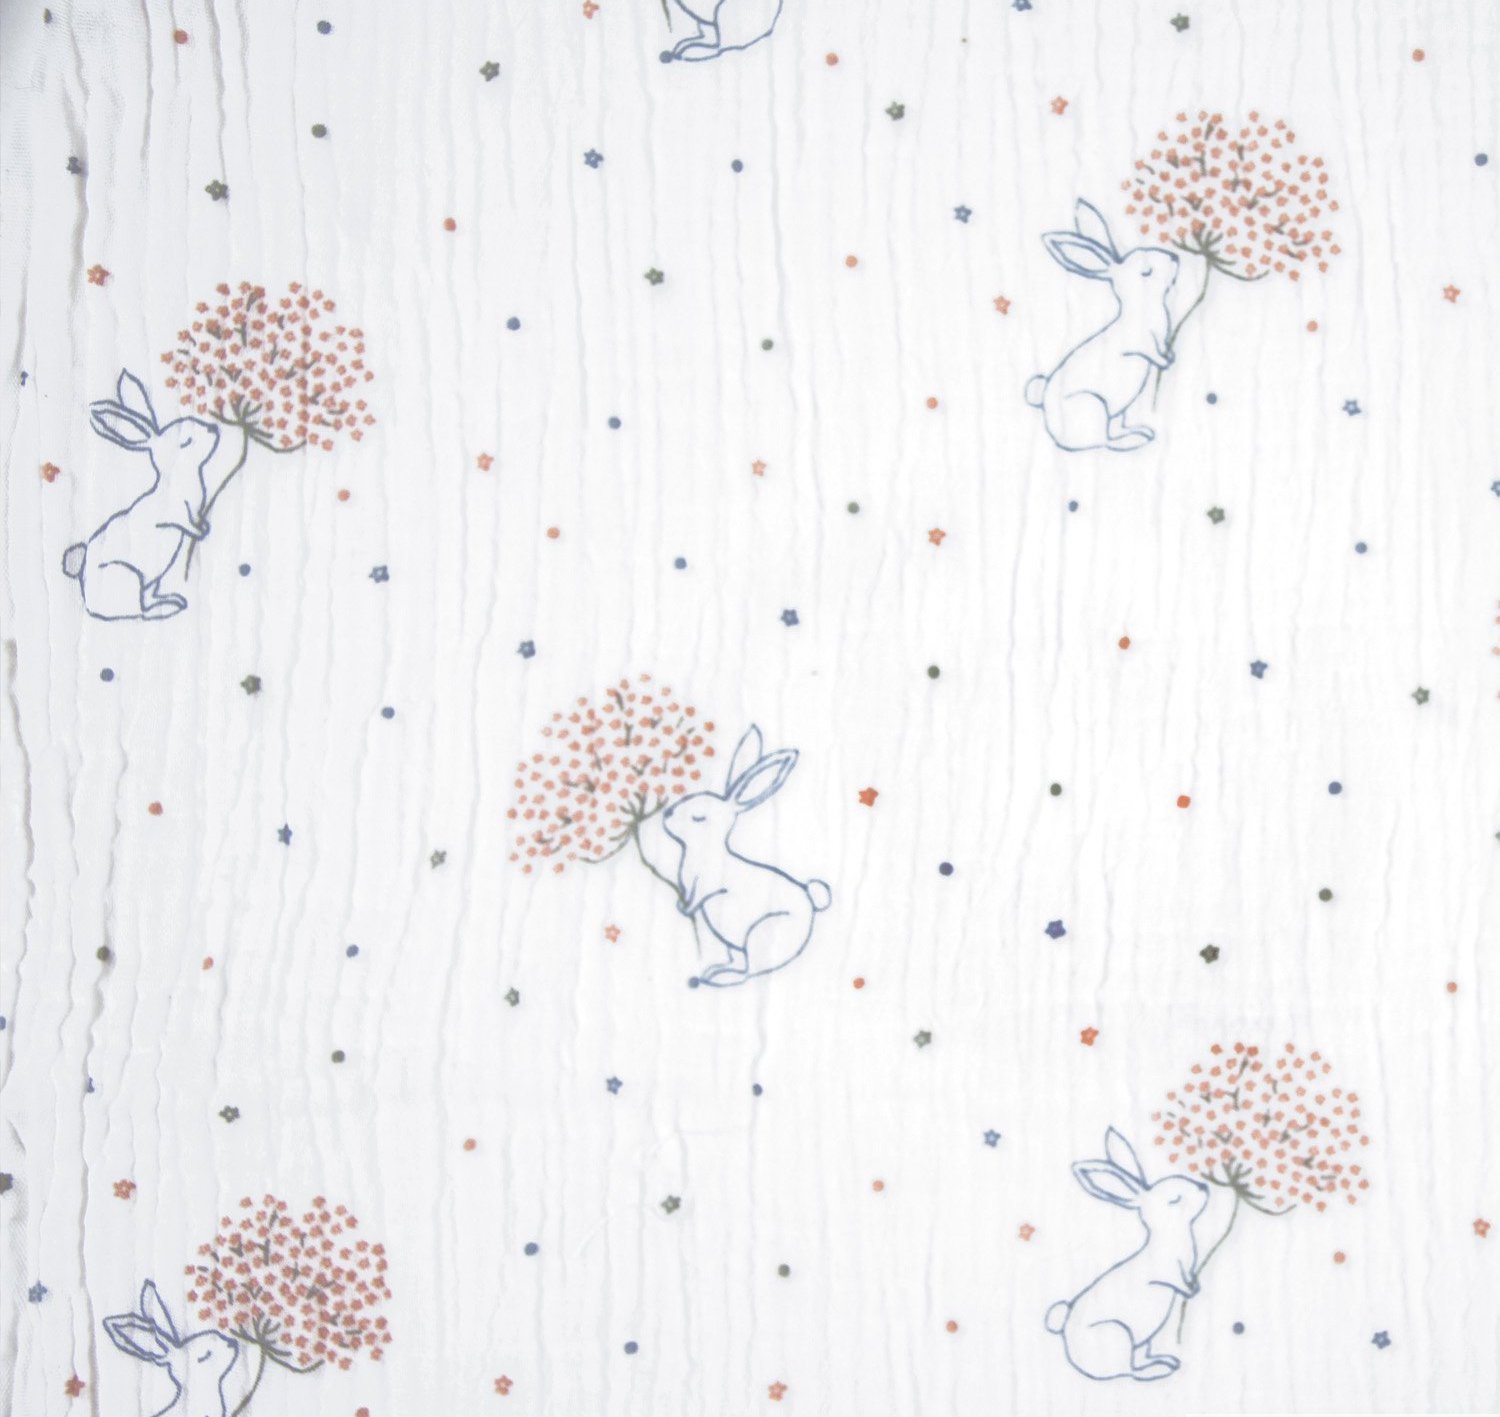 rabbit-flowers-muslin-fabrics-2115-24-katia-fhd